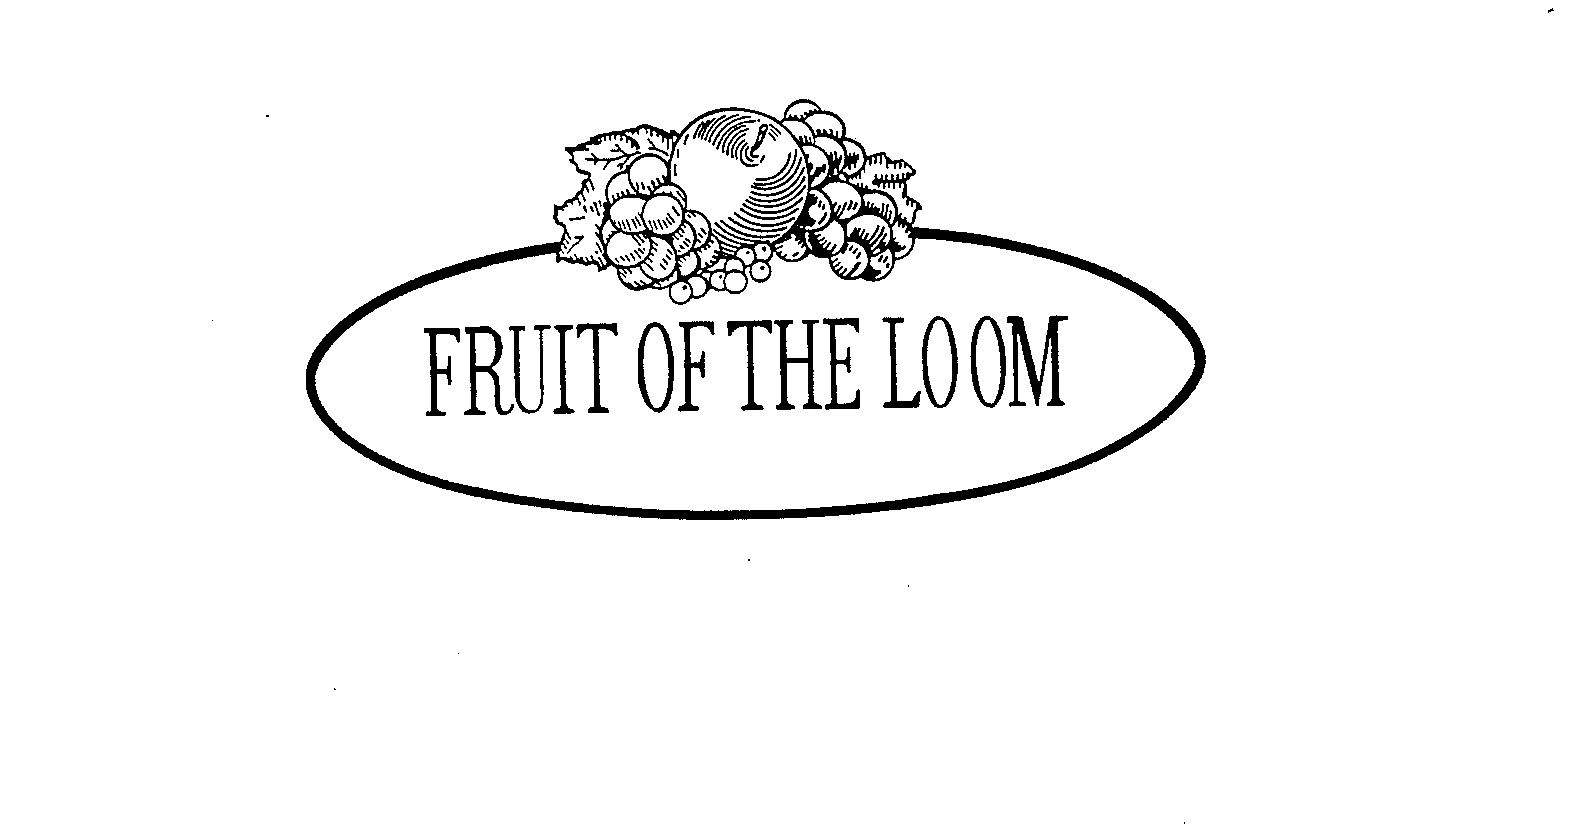 FRUIT OF THE LOOM - Fruit of the Loom, Inc. Trademark Registration